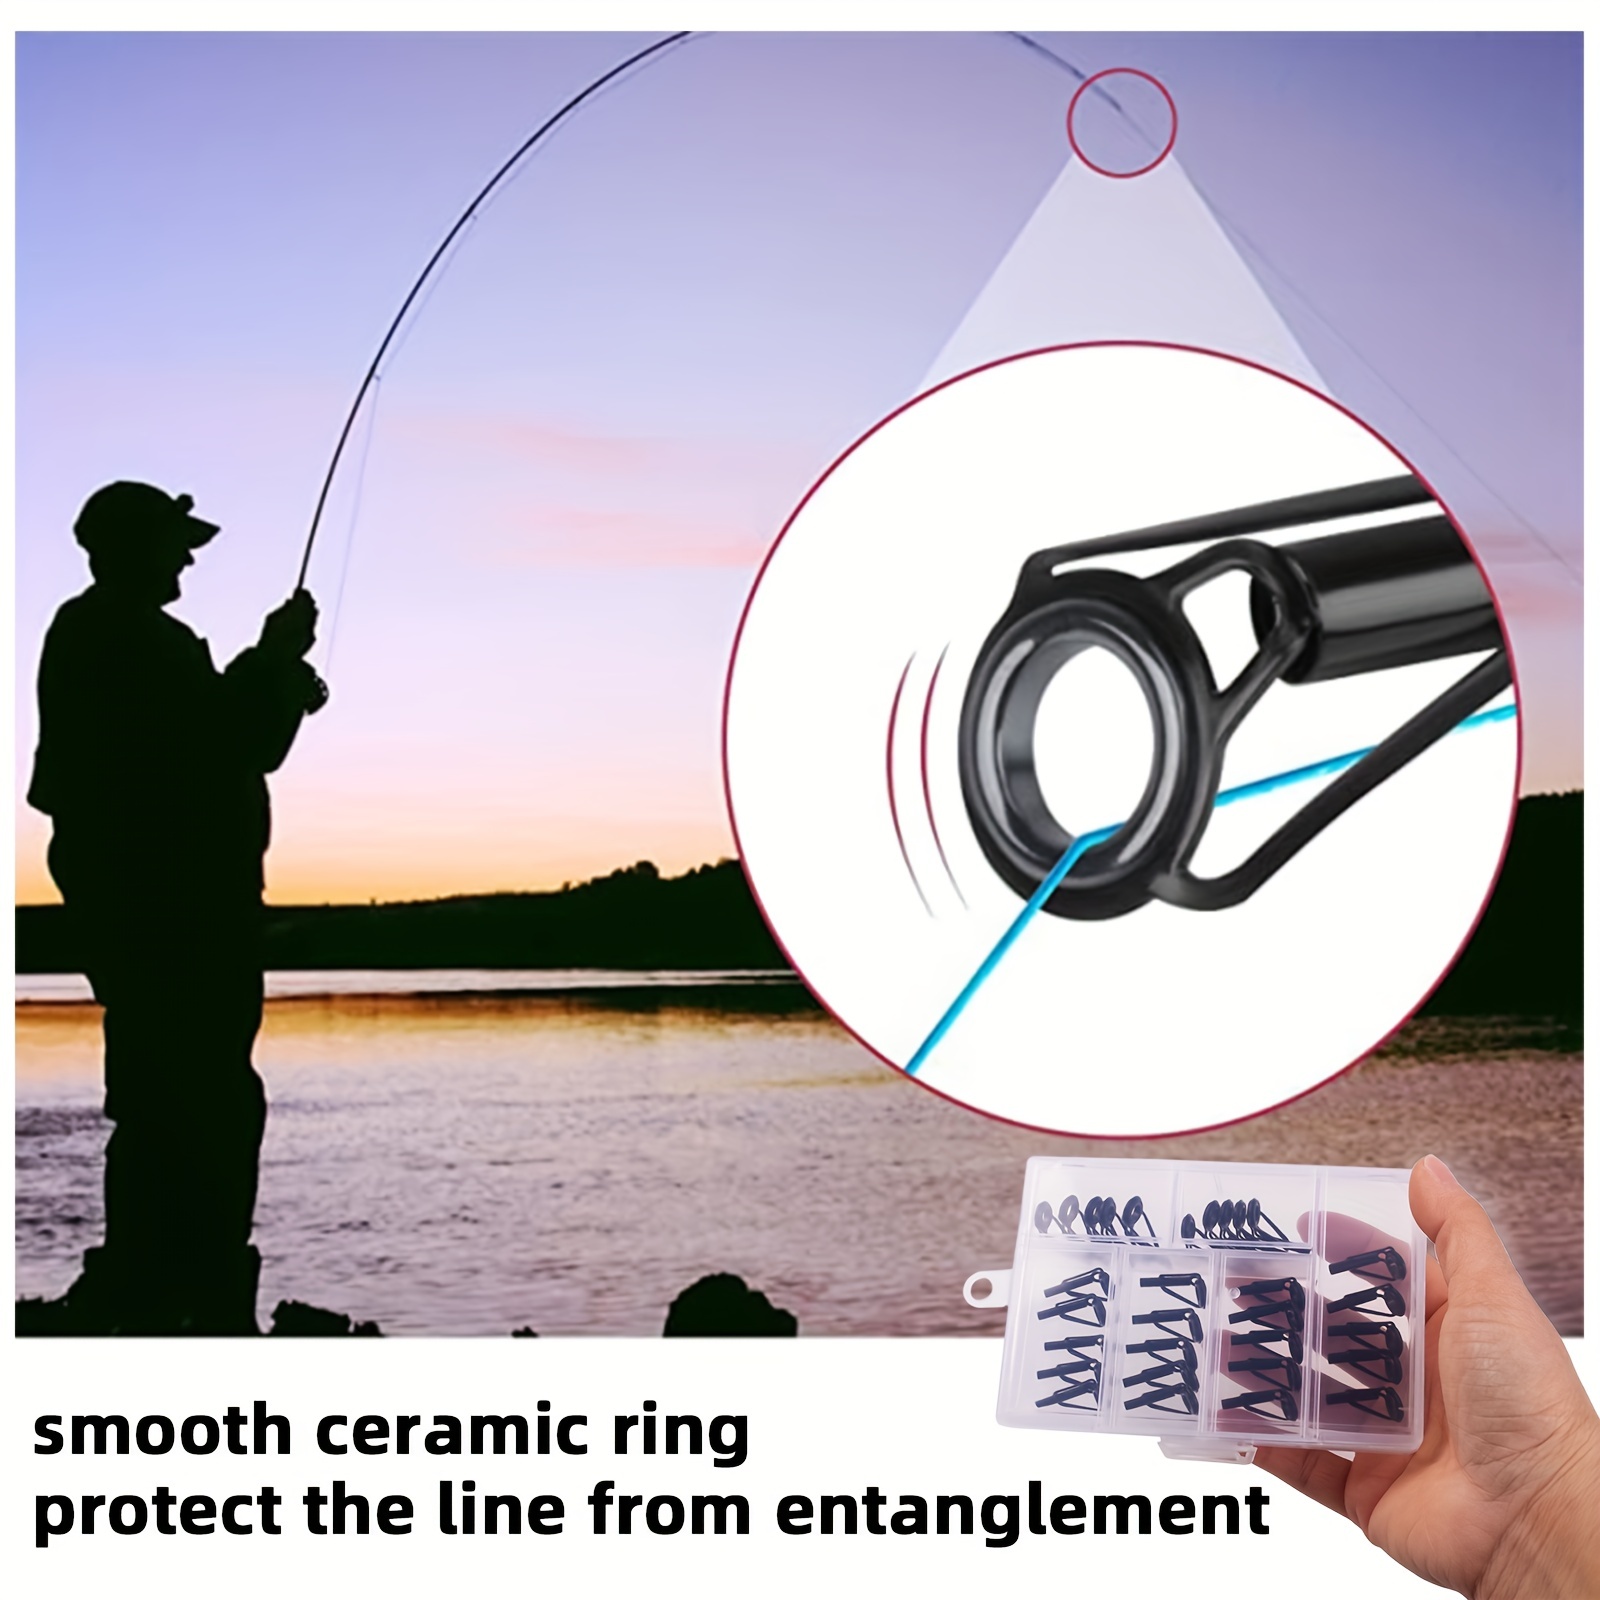 80pcs Stainless Steel Ceramic Fishing Rod Tip Repair Kit - Durable  Replacement Guide Rings for Rod Repair and Maintenance